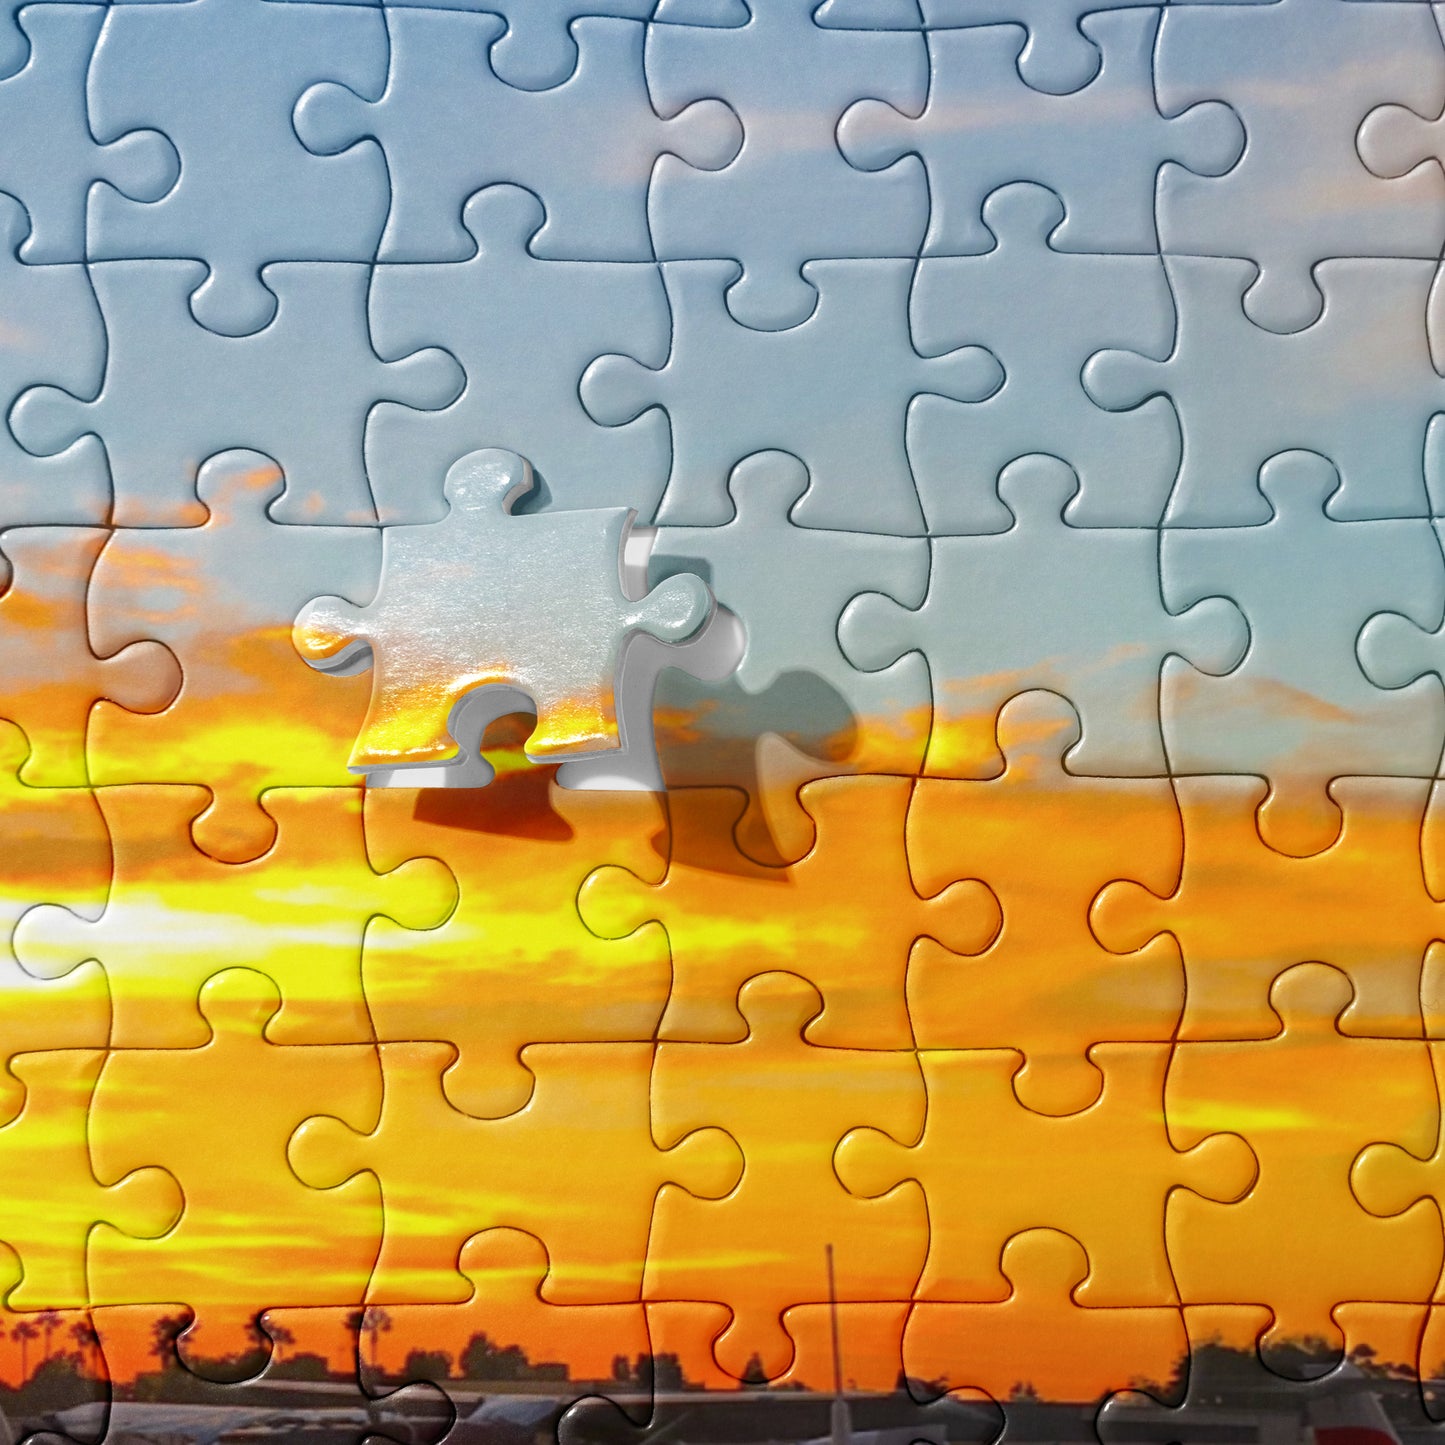 Skyhawk at dusk at Santa Monica Airport jigsaw puzzle